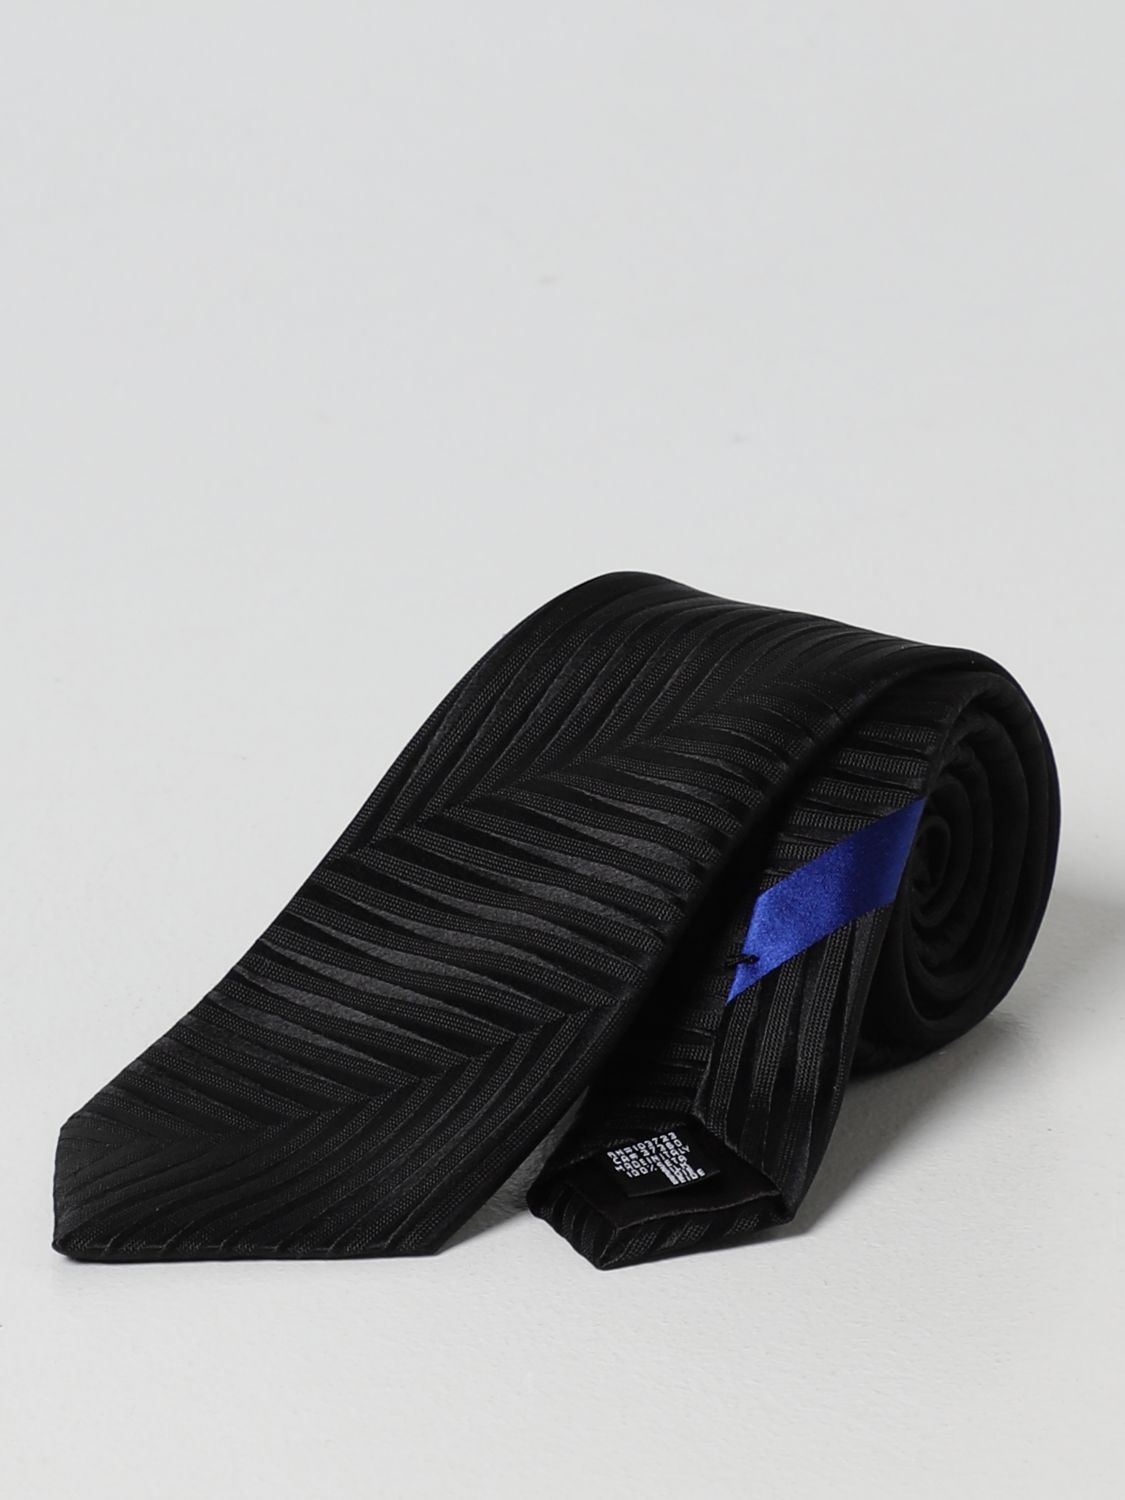 Krawatte Giorgio Armani: Giorgio Armani Herren Krawatte schwarz 1